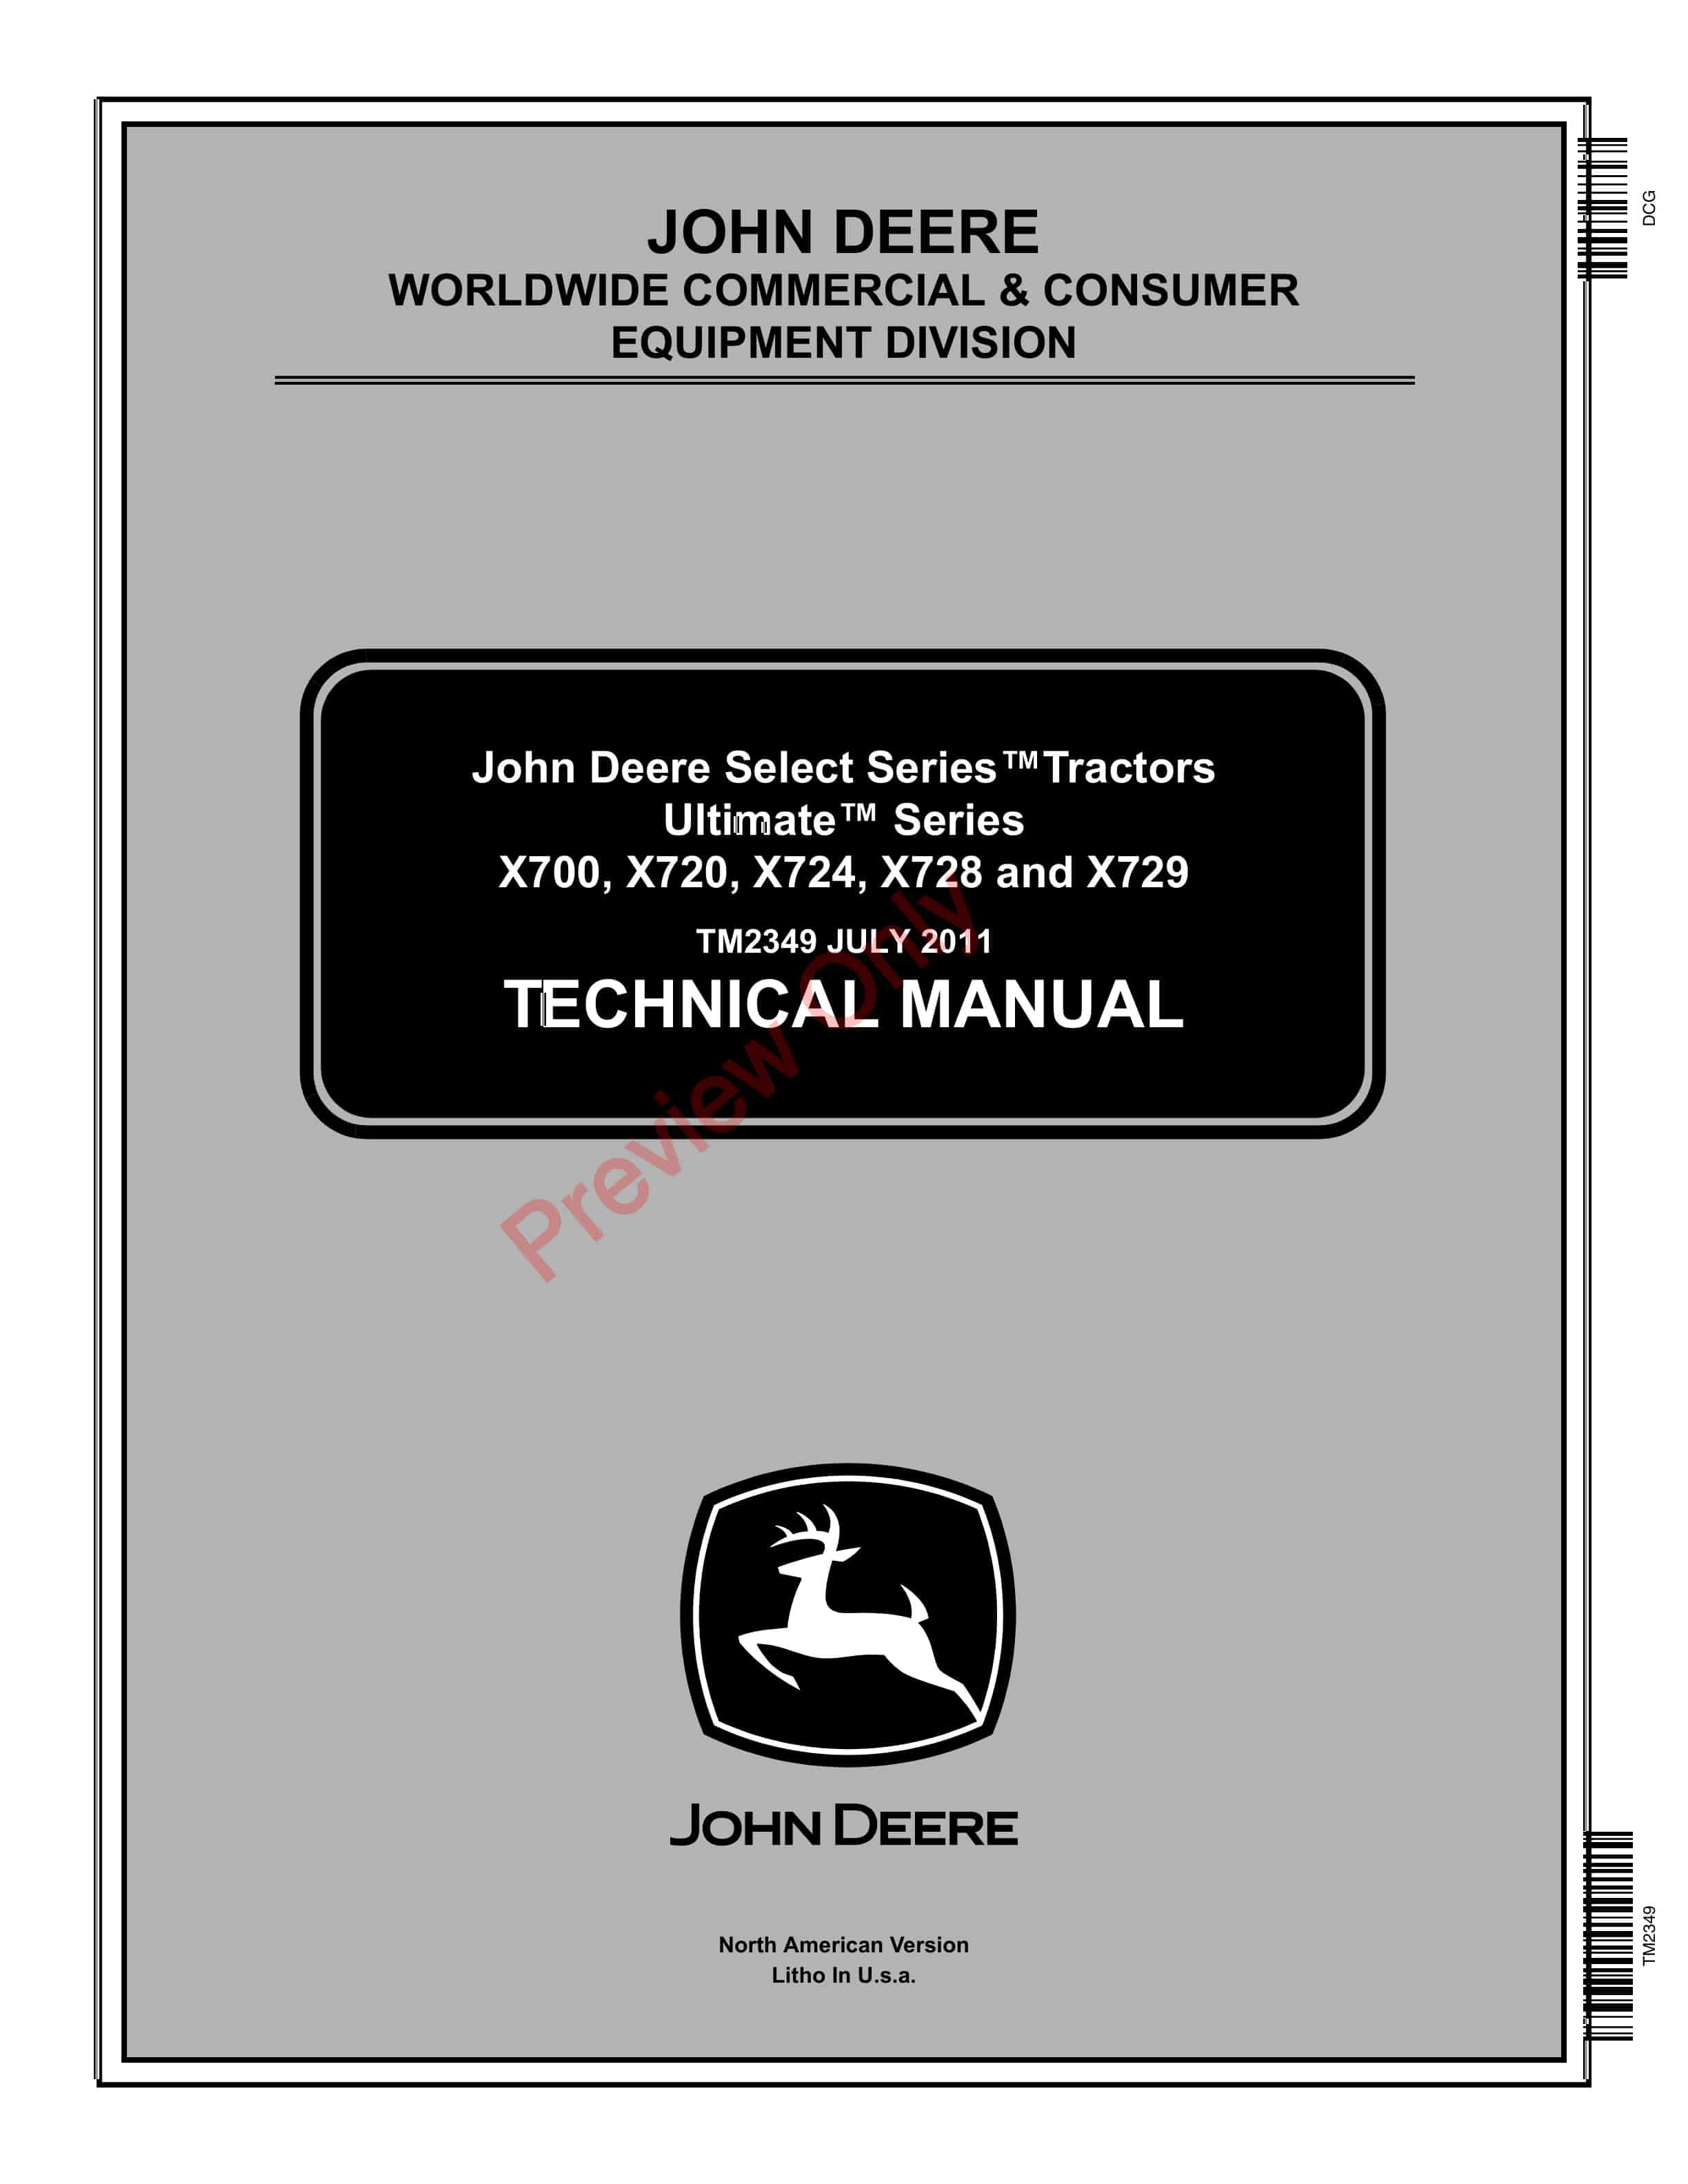 John Deere X700 X720 X724 X728 and X729 Ultimate Select Series Tractor Technical Manual TM2349 01JUL11 1